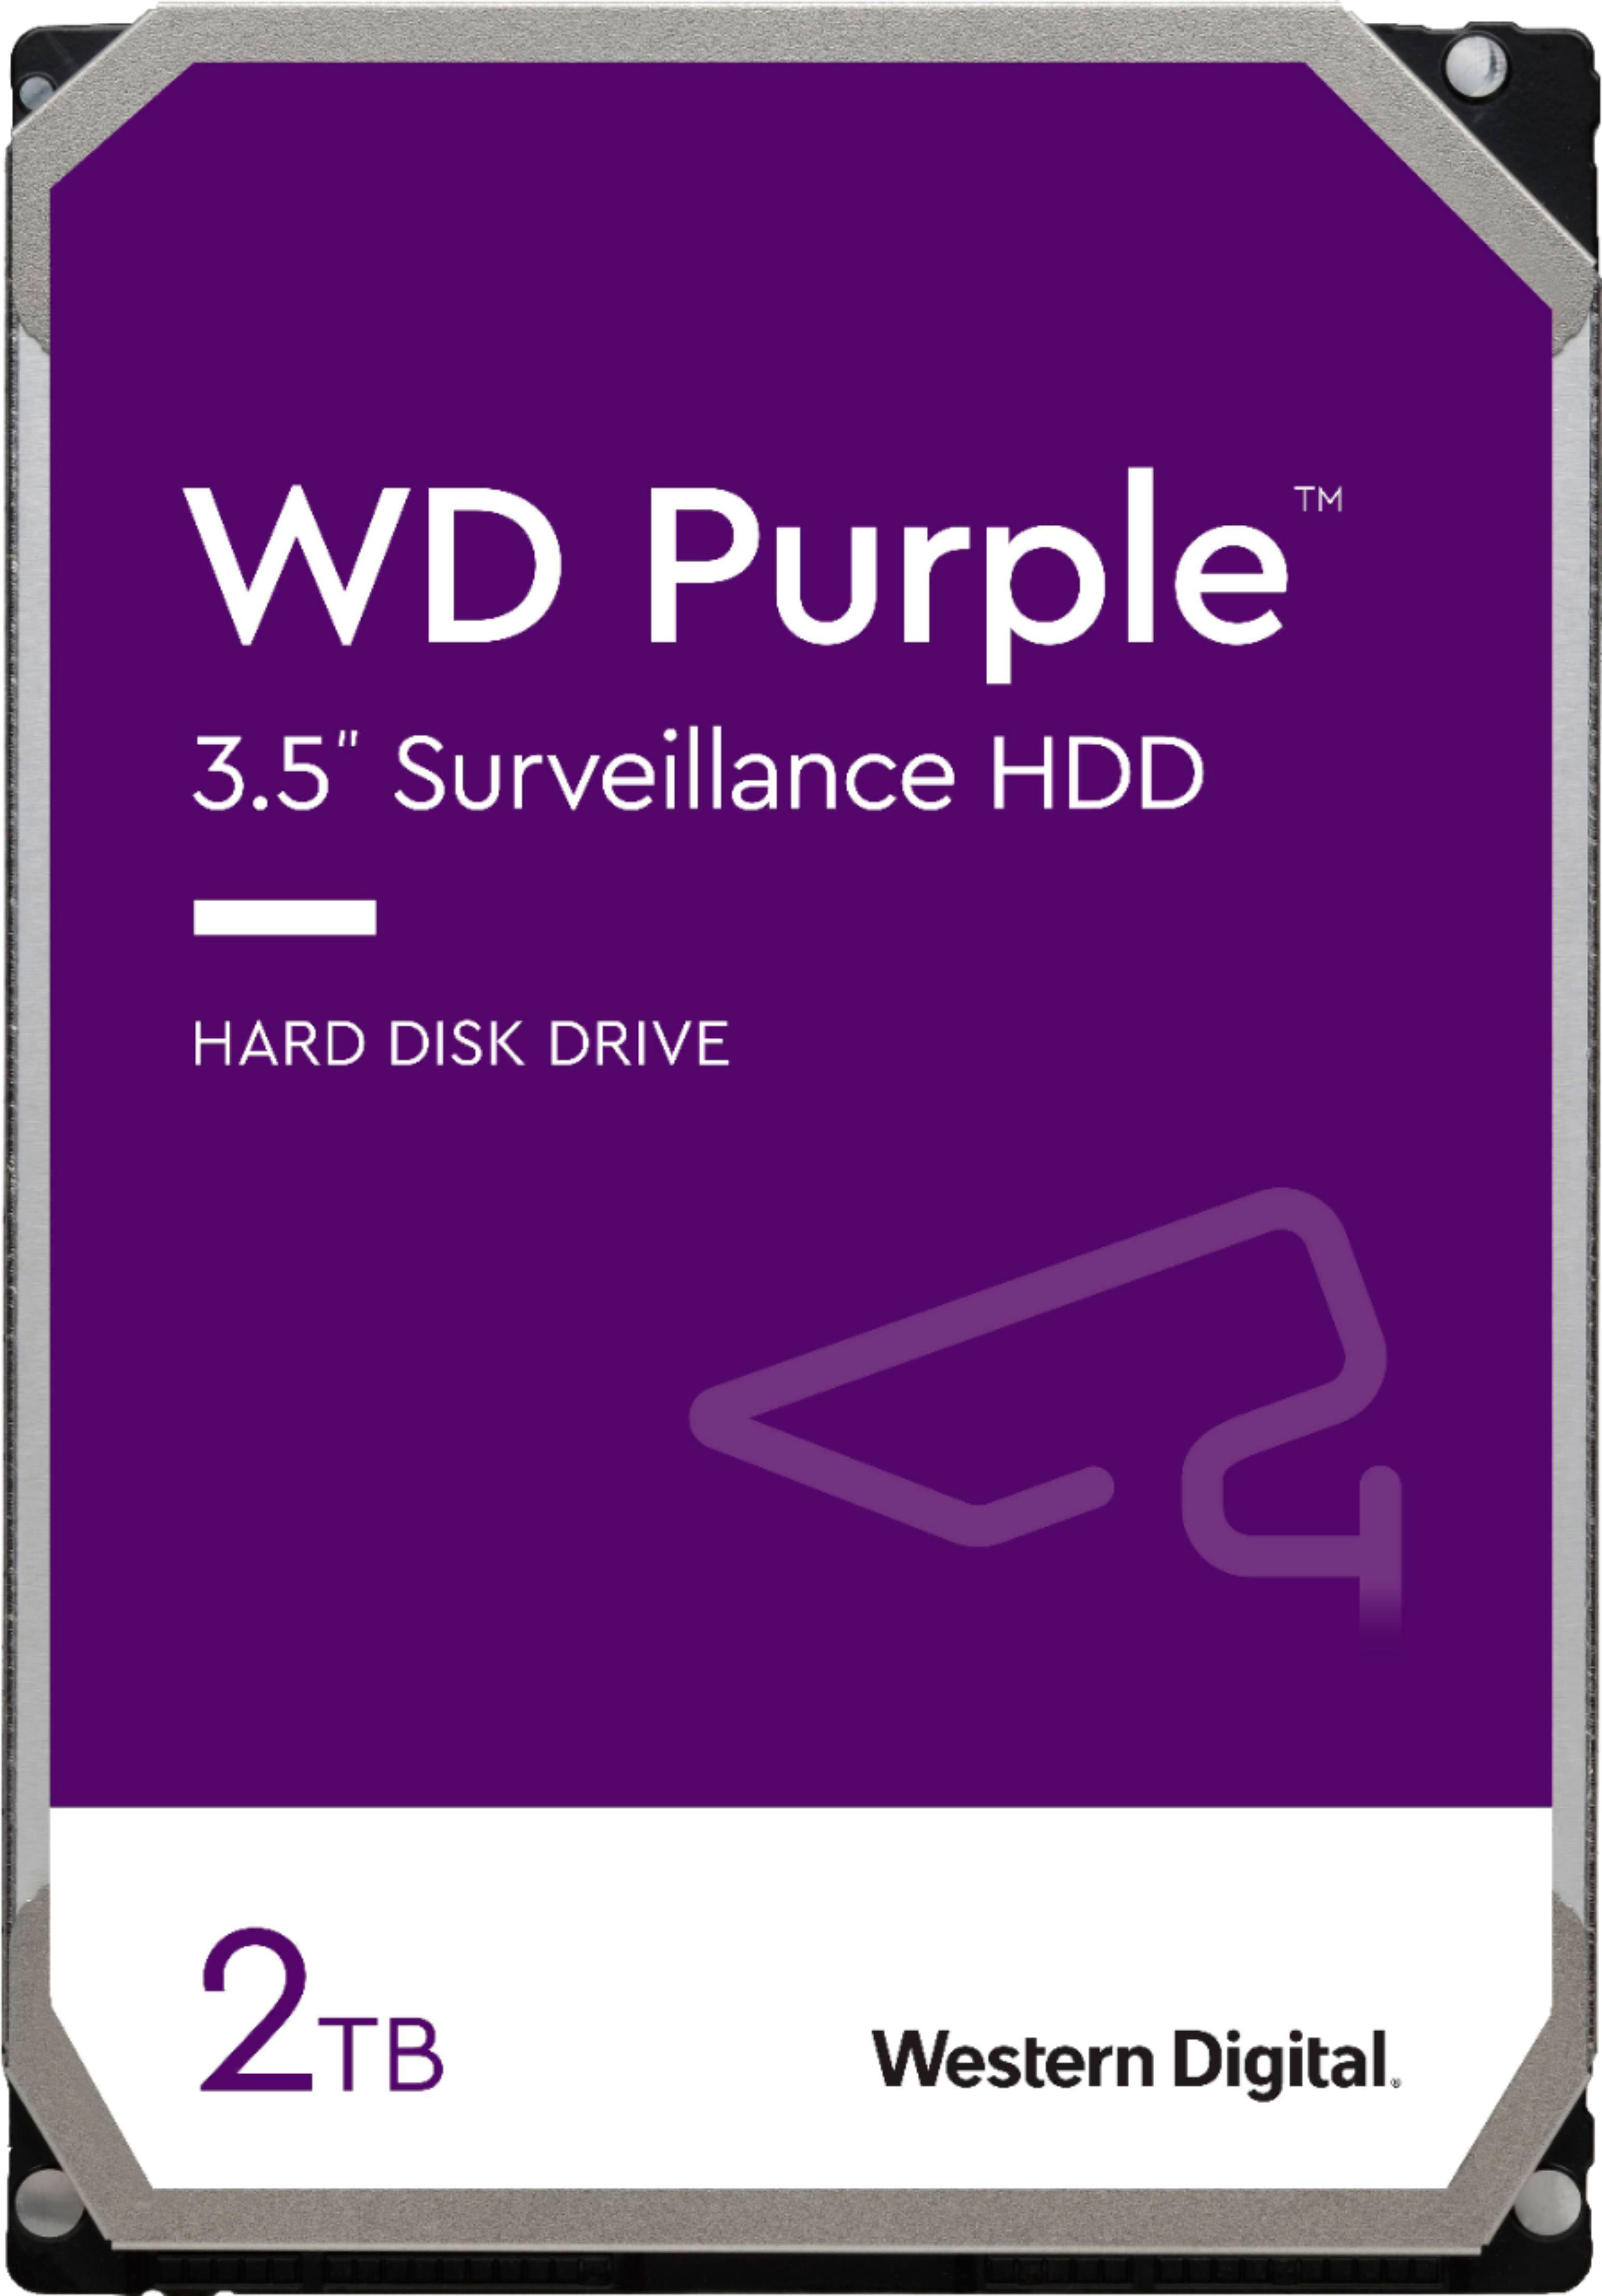 WD - Purple Surveillance 2TB Internal SATA Hard Drive for Desktops